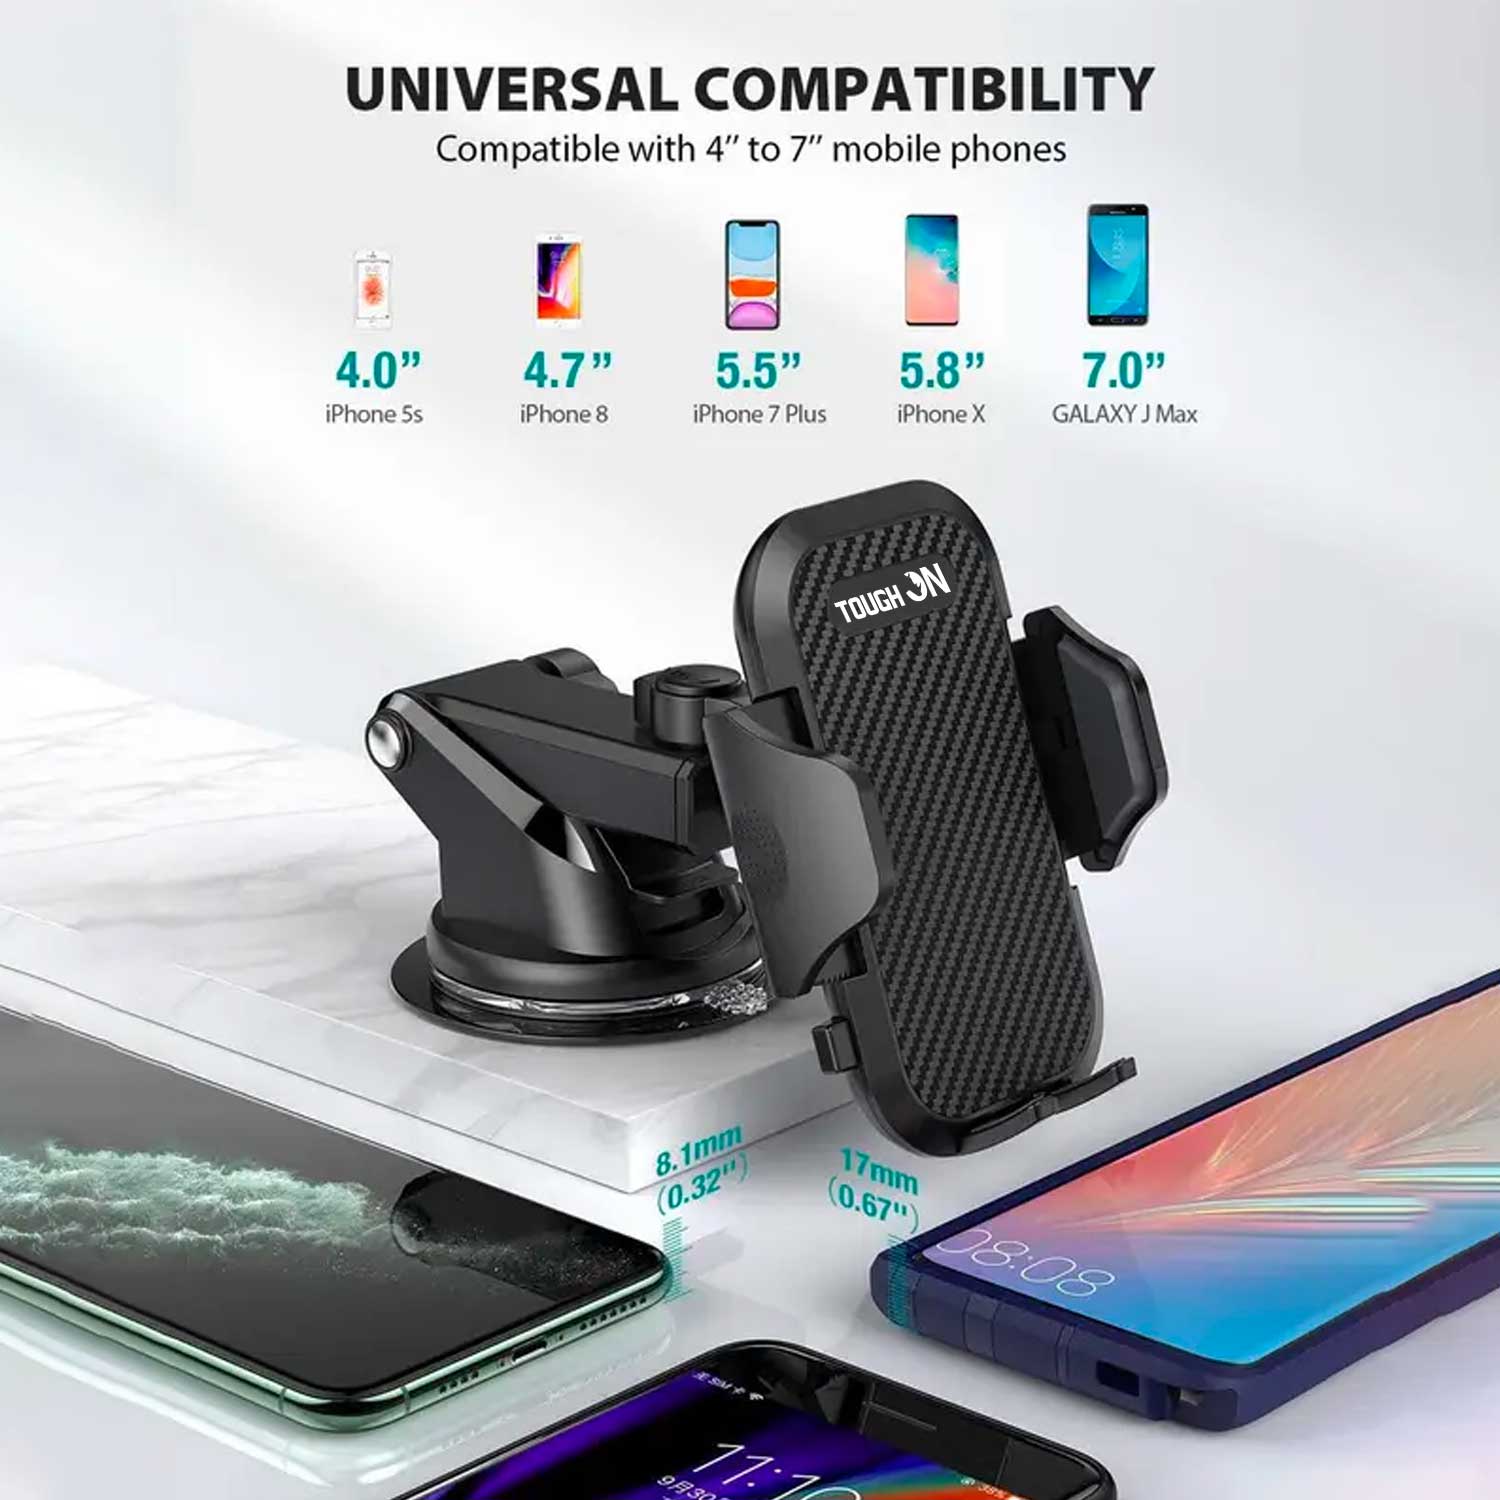 Tough On Universal 360° Smartphone 2-in-1 Car Holder Black